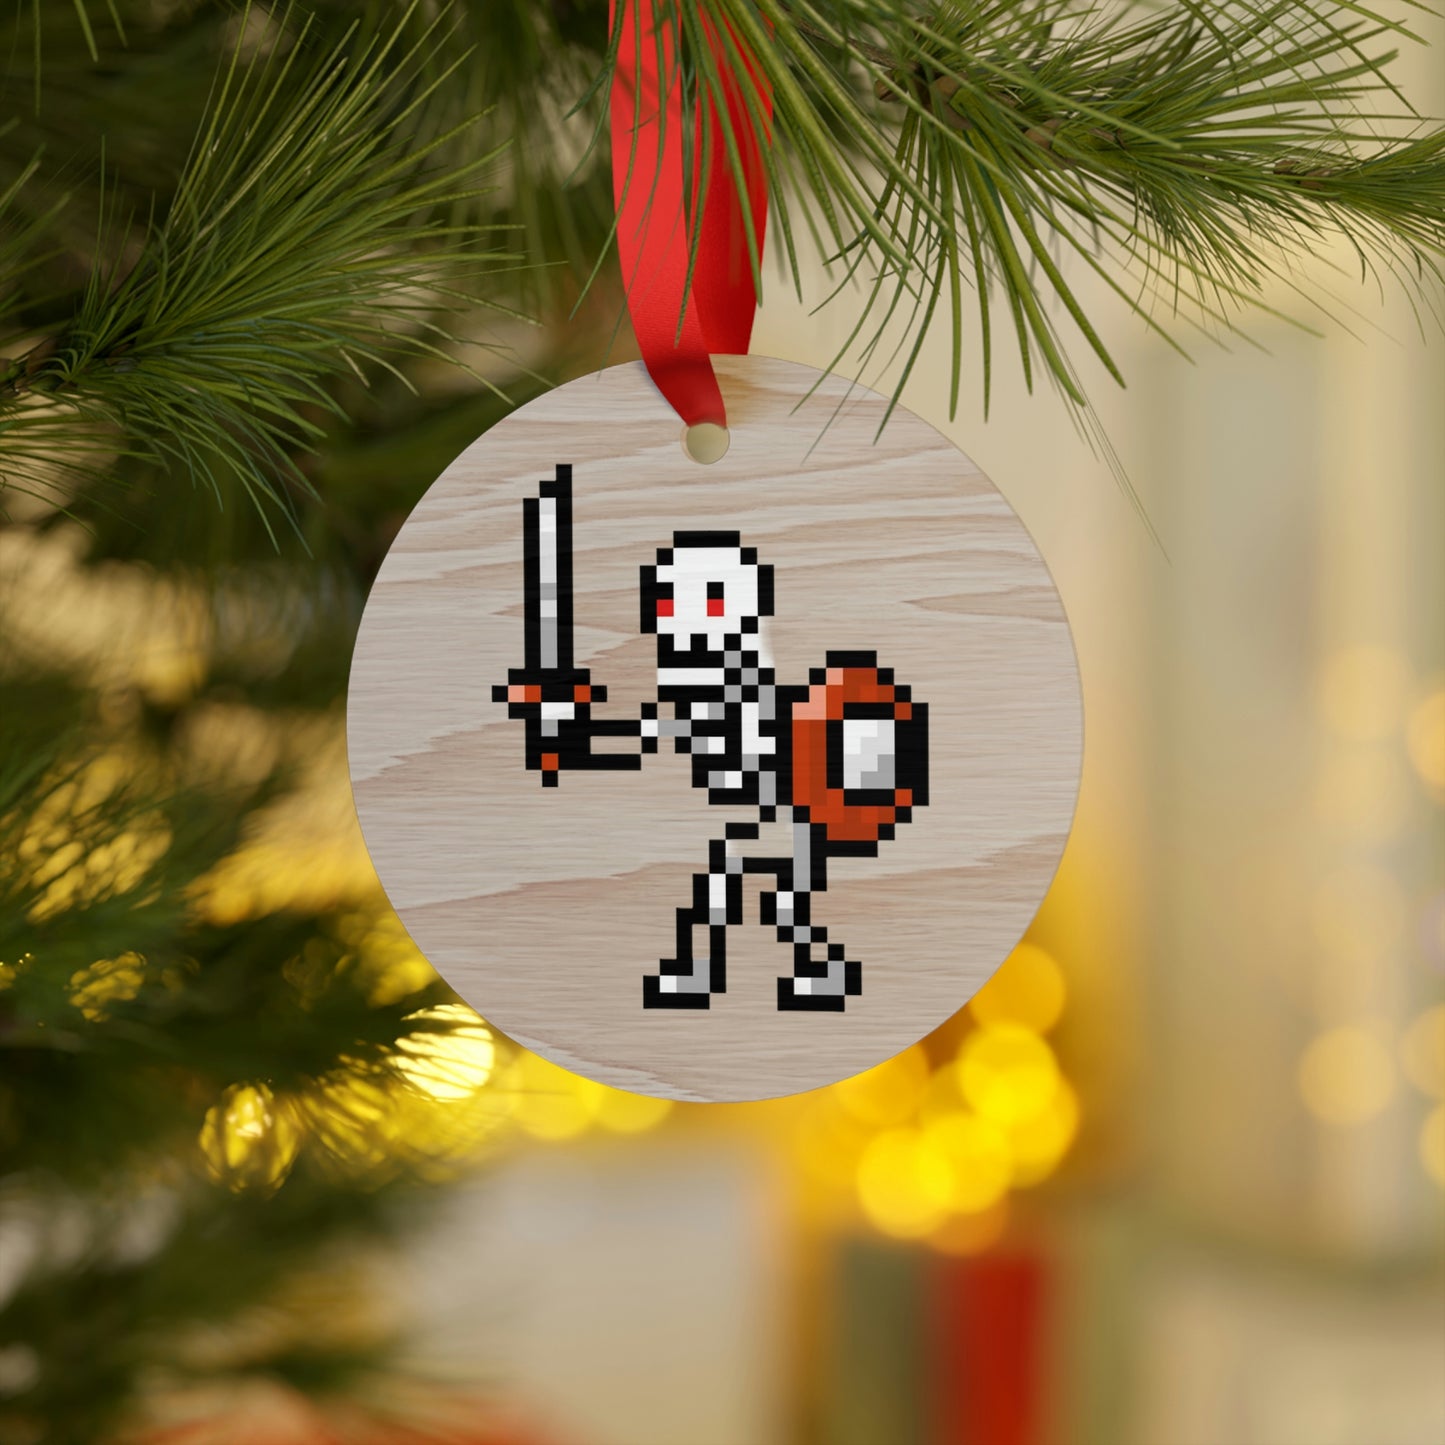 Skeleton 8 Bit Retro Style Wooden Christmas Ornaments